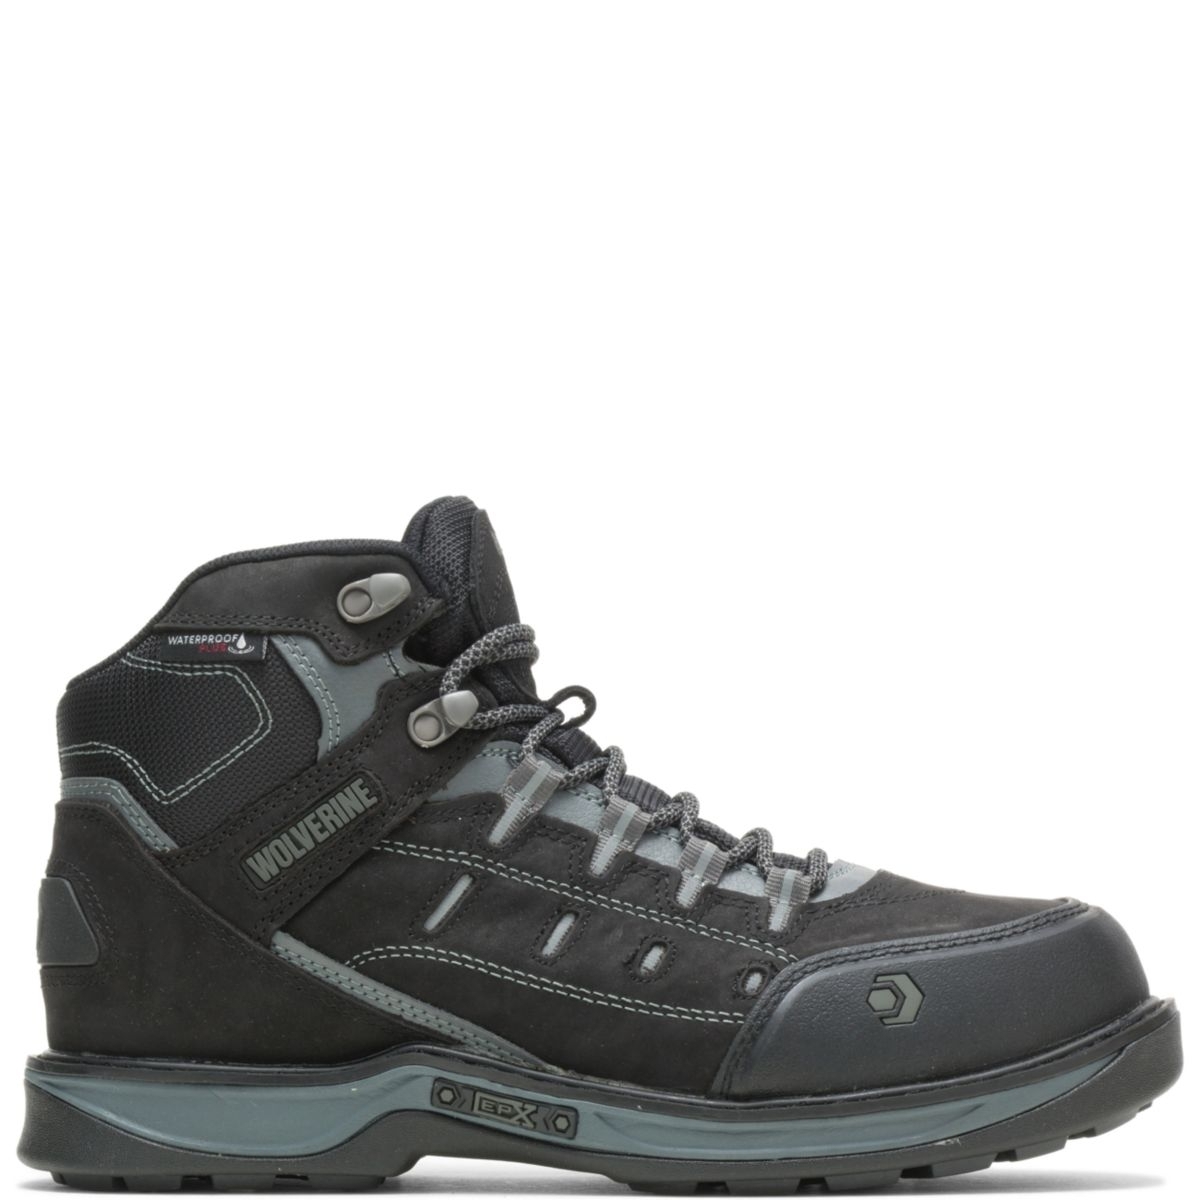 WOLVERINE Men's Edge LX Waterproof CarbonMAXÂ® Composite Toe Work Boot Black/Grey - W10553 BLACK/GREY - BLACK/GREY, 11